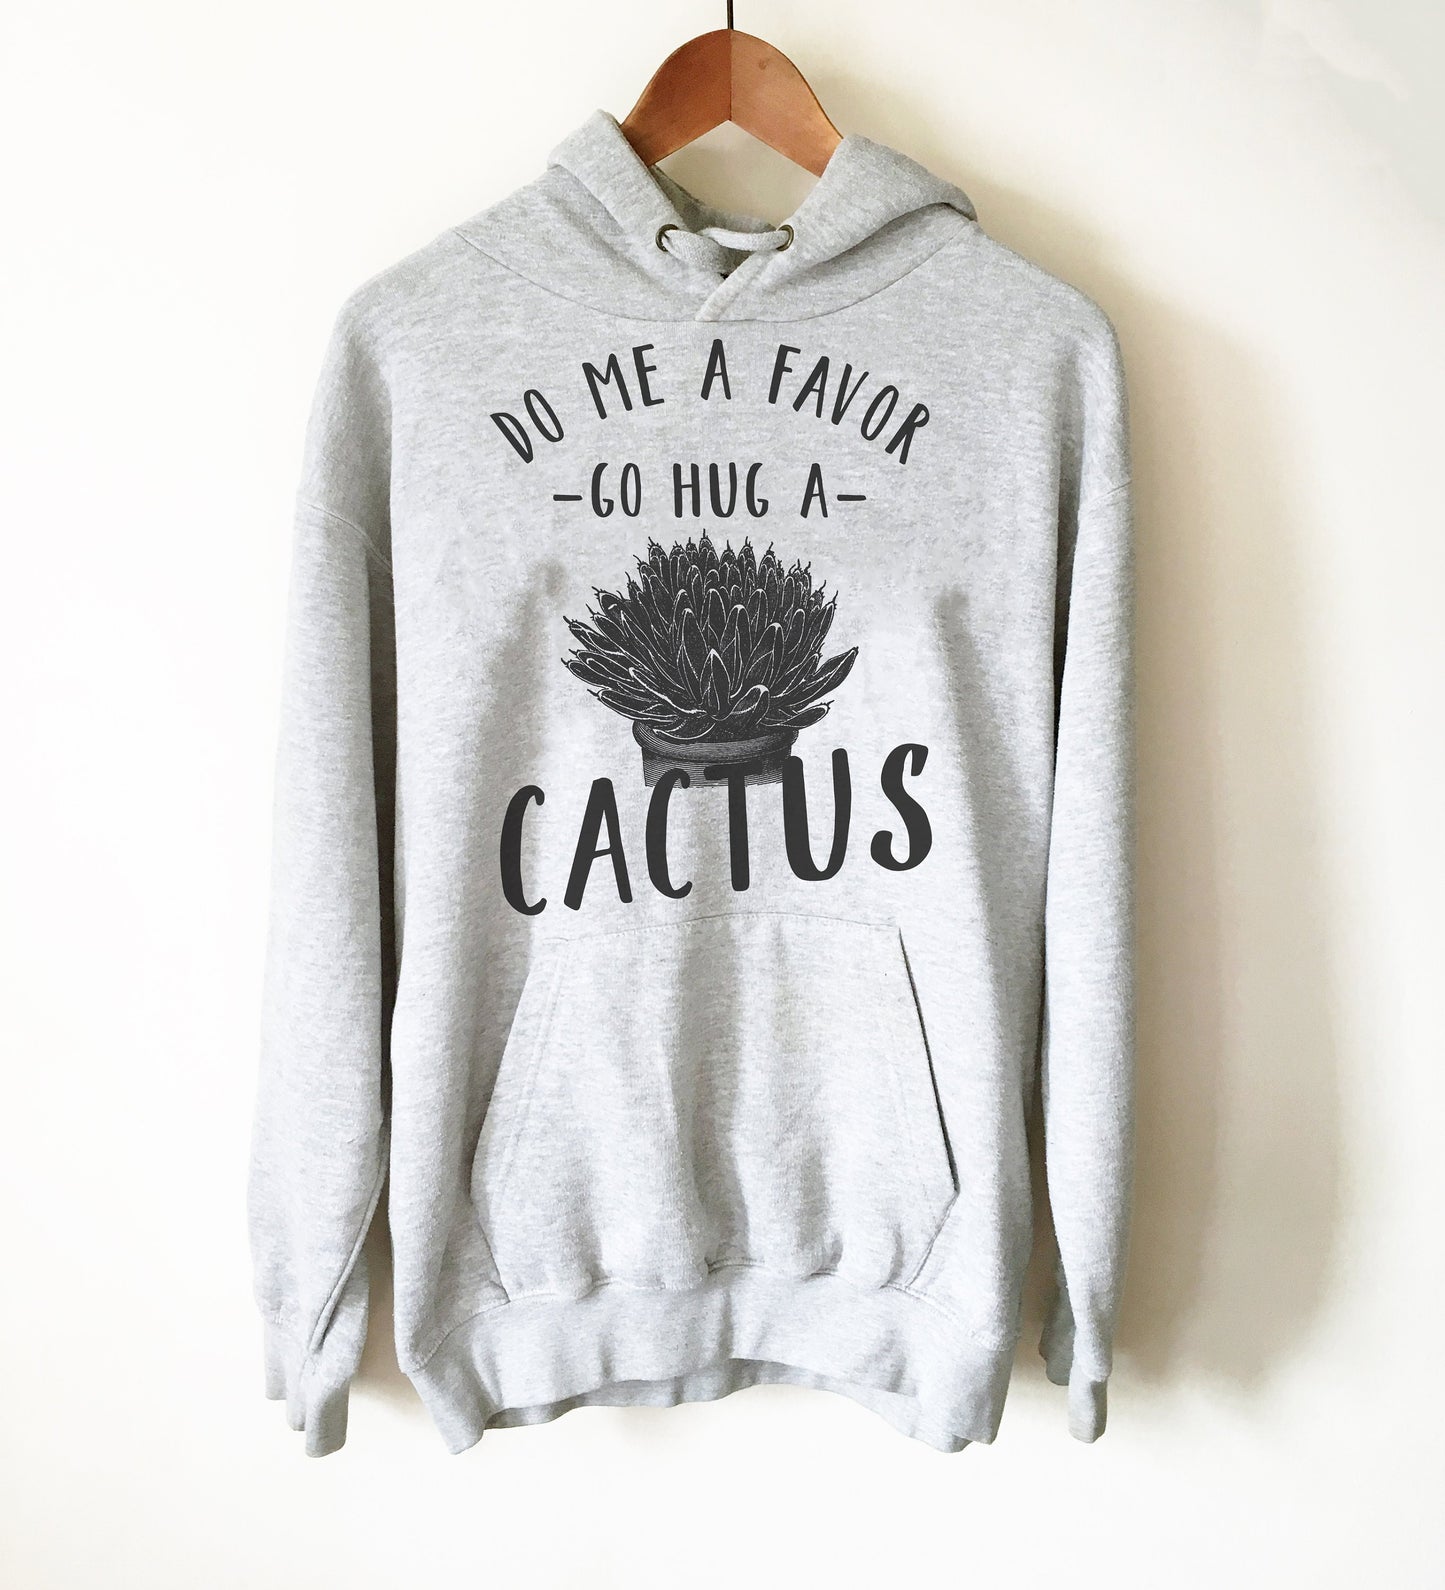 Go Hug A Cactus Hoodie - Cactus Shirt, Cactus Gift, Succulent Shirt, Succulent Gift, Gardening Shirt, Gardening Gift